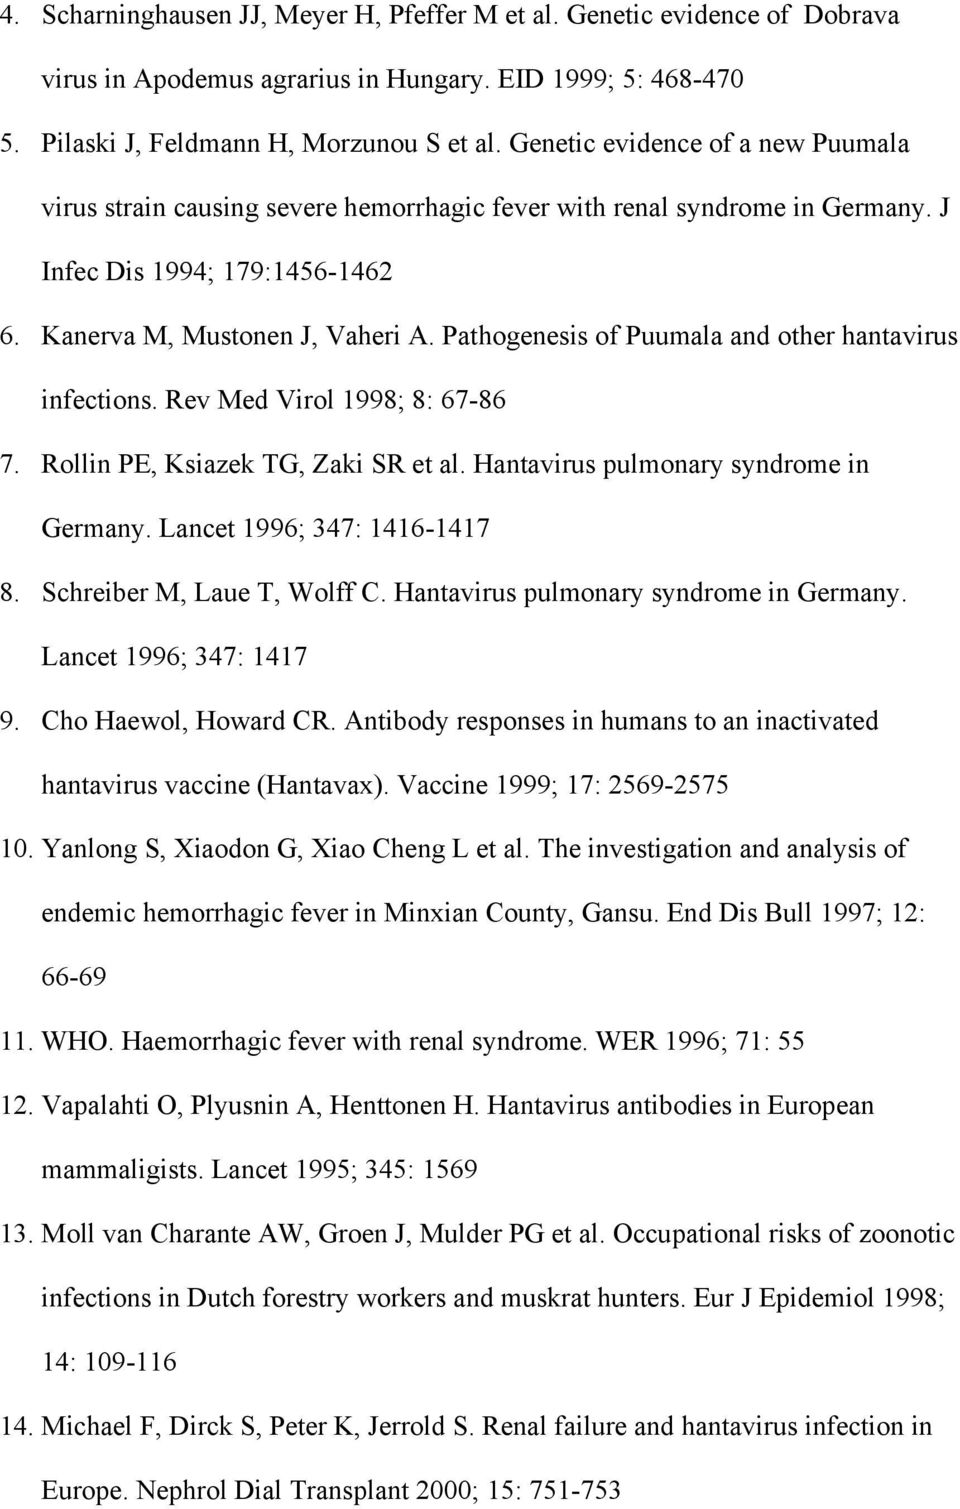 Pathogenesis of Puumala and other hantavirus infections. Rev Med Virol 1998; 8: 67-86 7. Rollin PE, Ksiazek TG, Zaki SR et al. Hantavirus pulmonary syndrome in Germany. Lancet 1996; 347: 1416-1417 8.